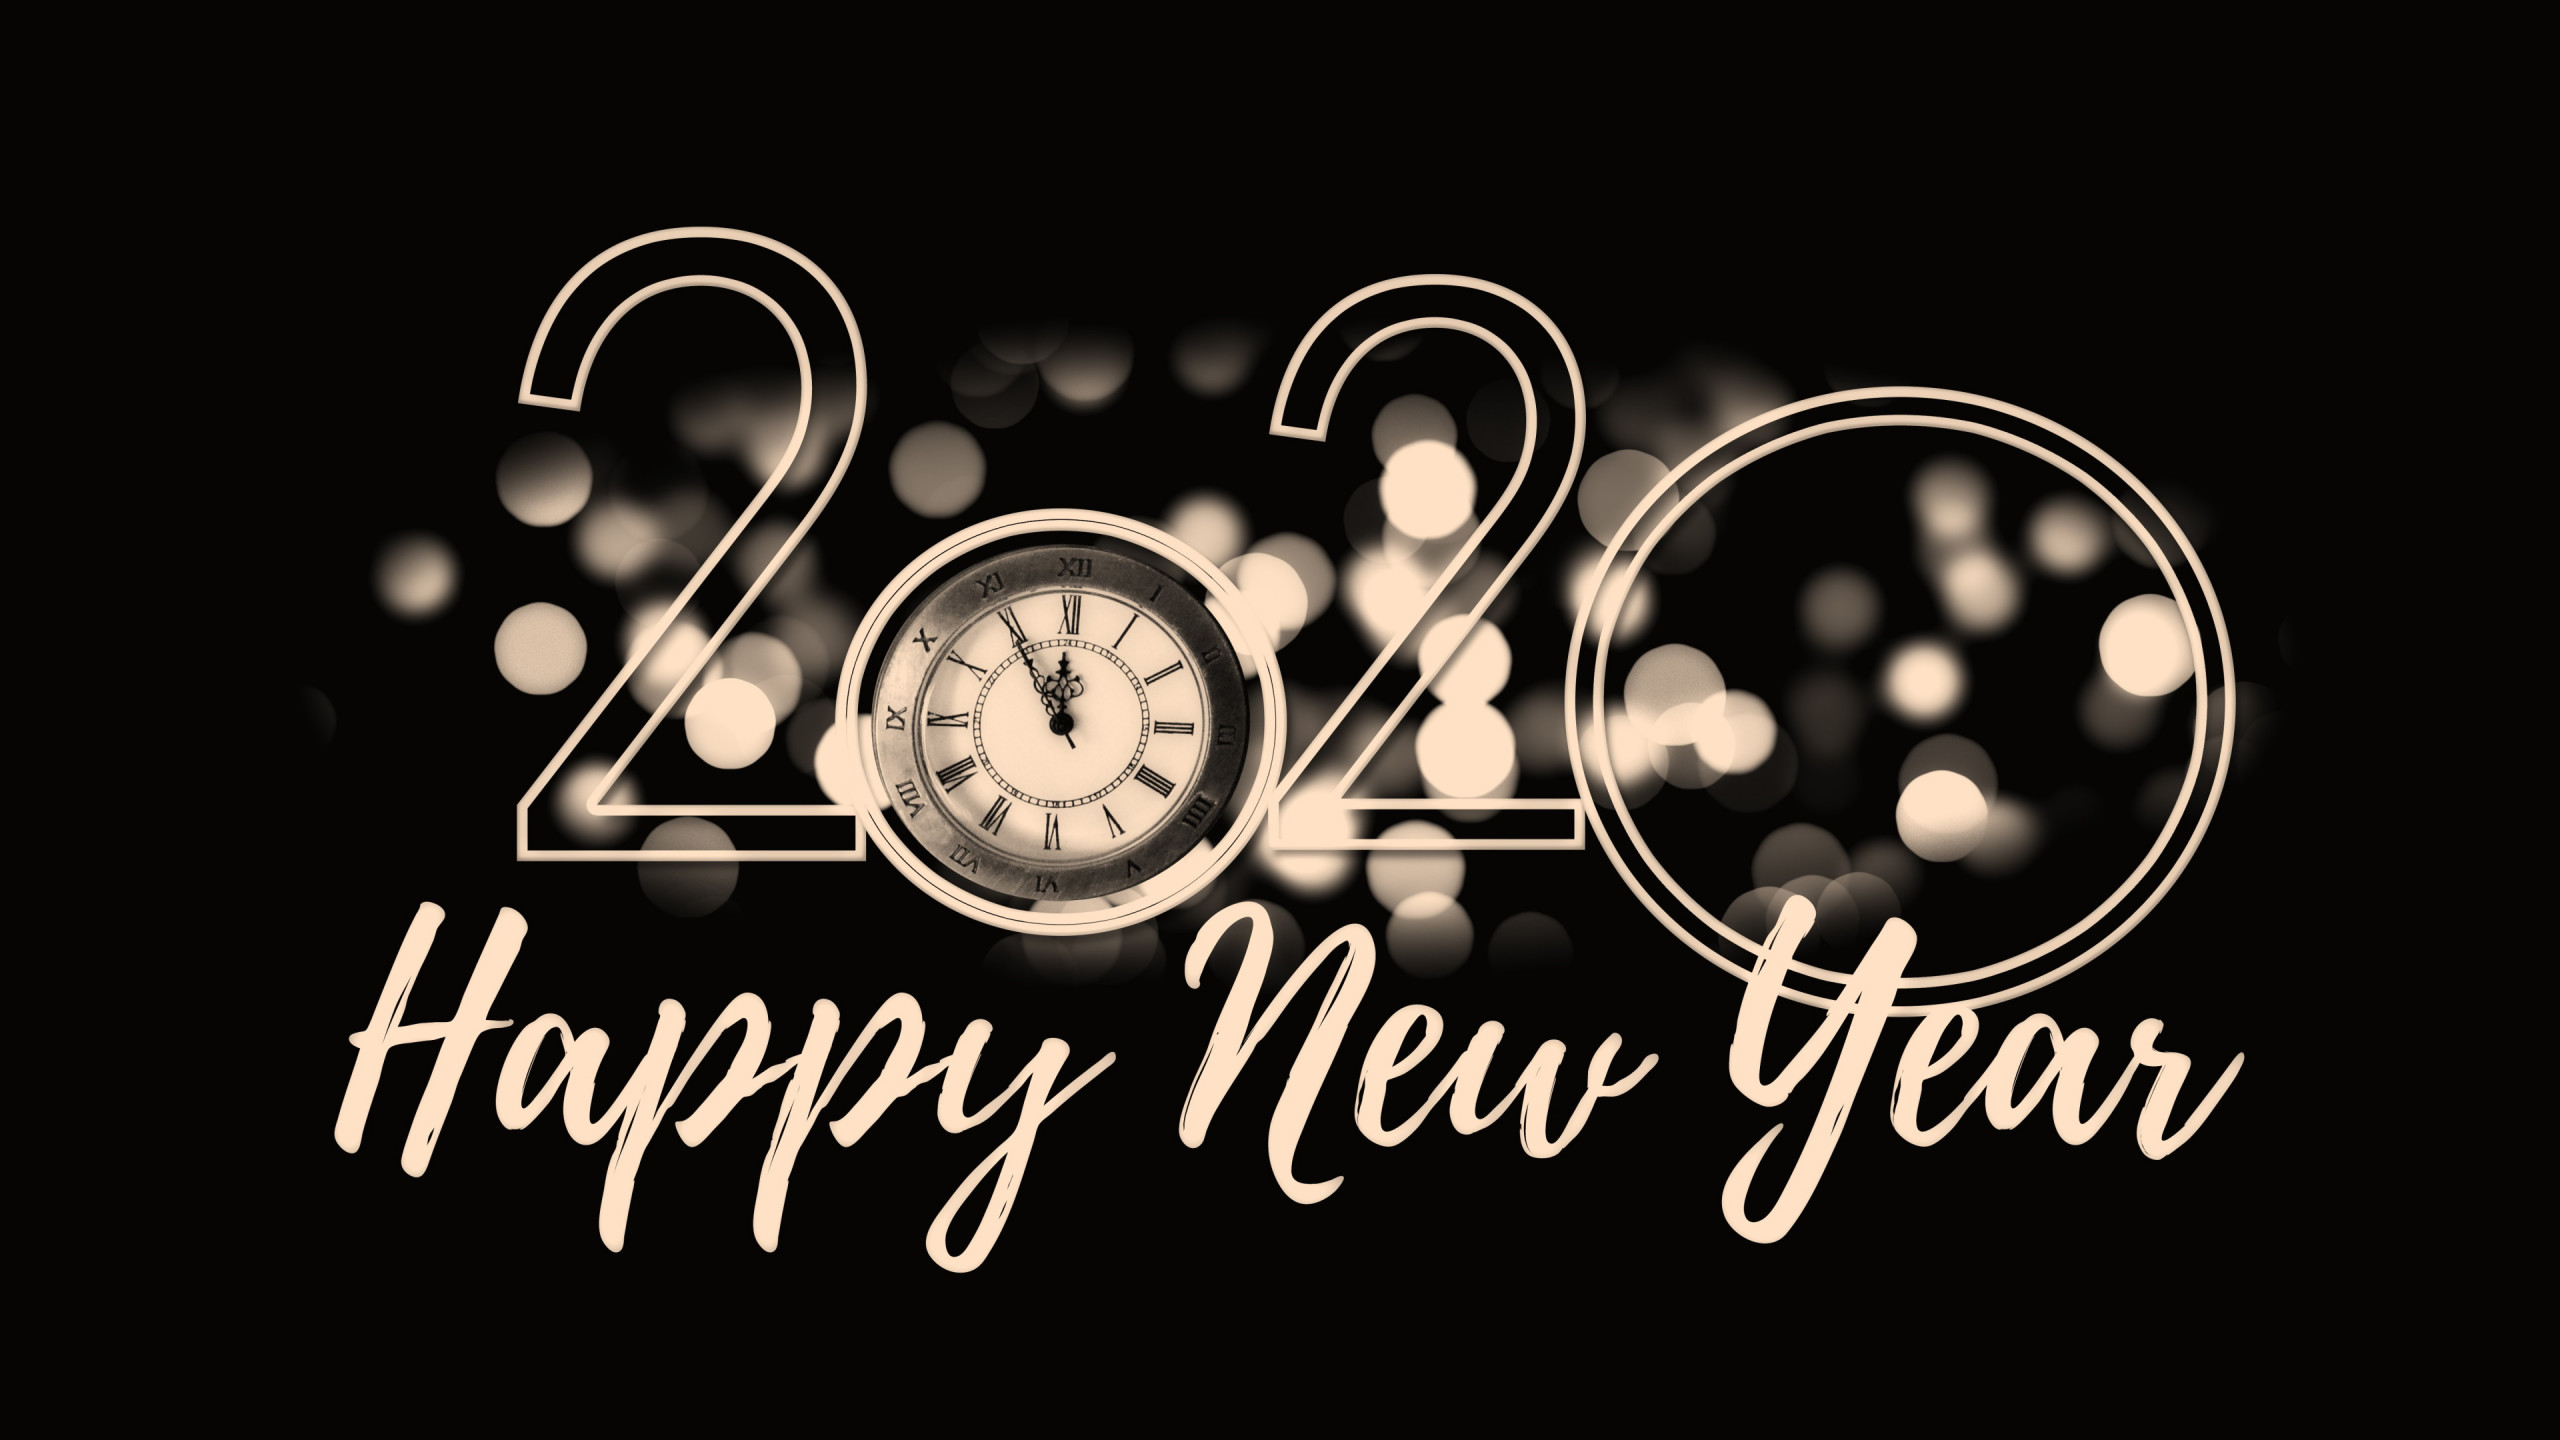 2020 Happy New Year wallpaper 2560x1440